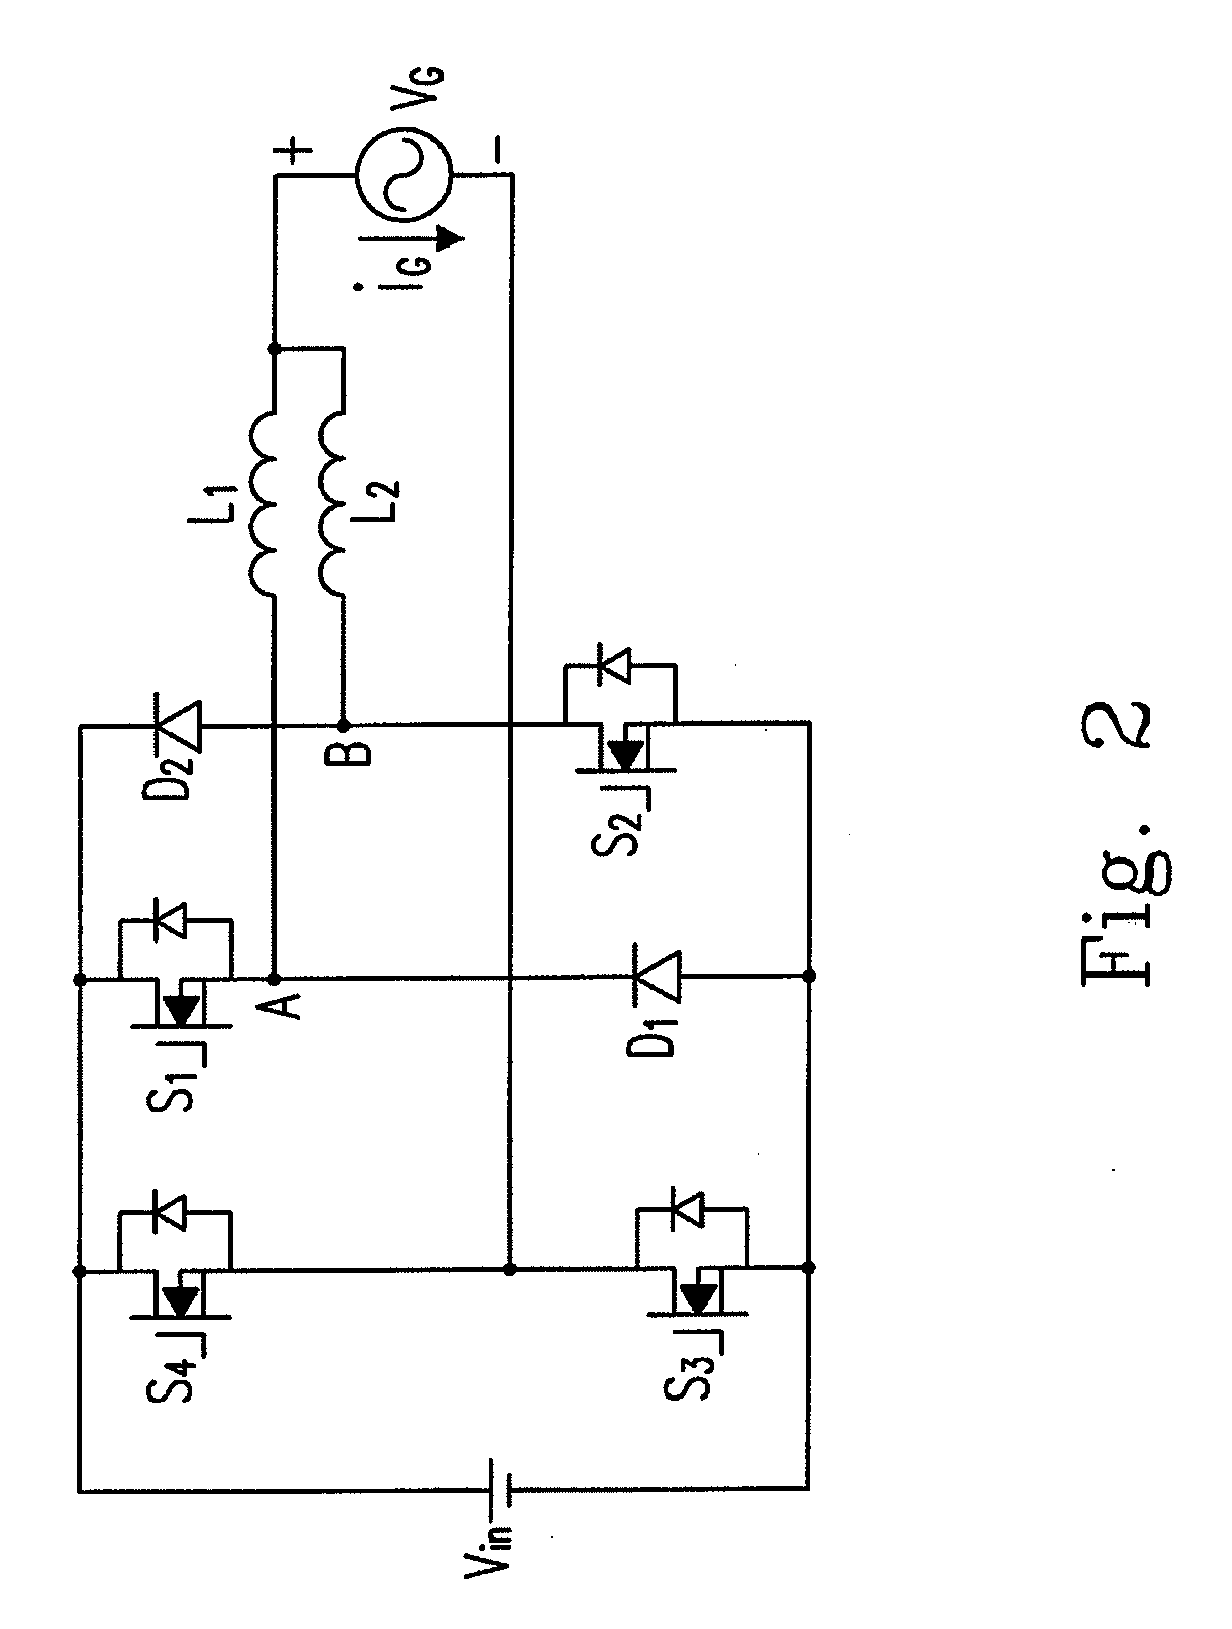 Inverter circuit having relatively higher efficiency